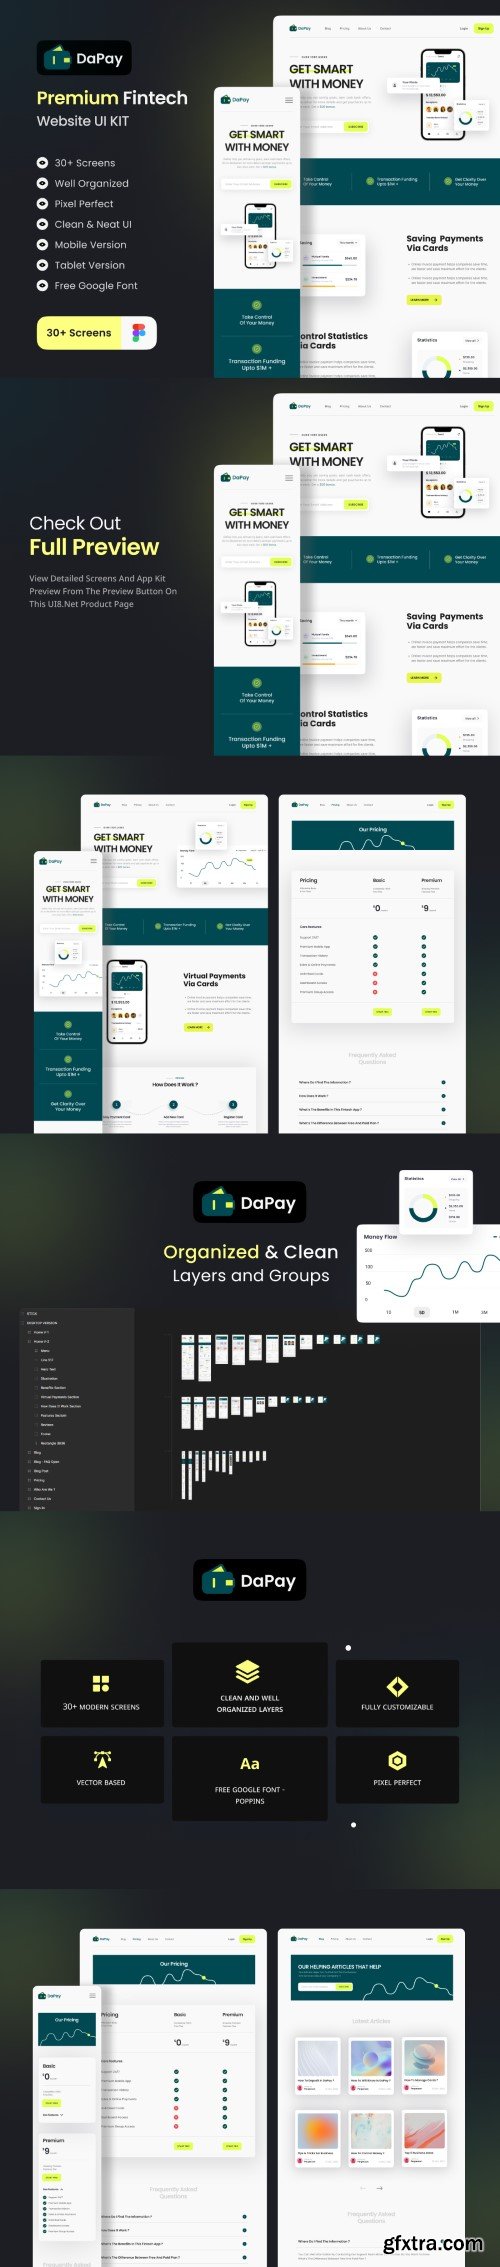 DaPay - Fintech Landing Page UI KIT